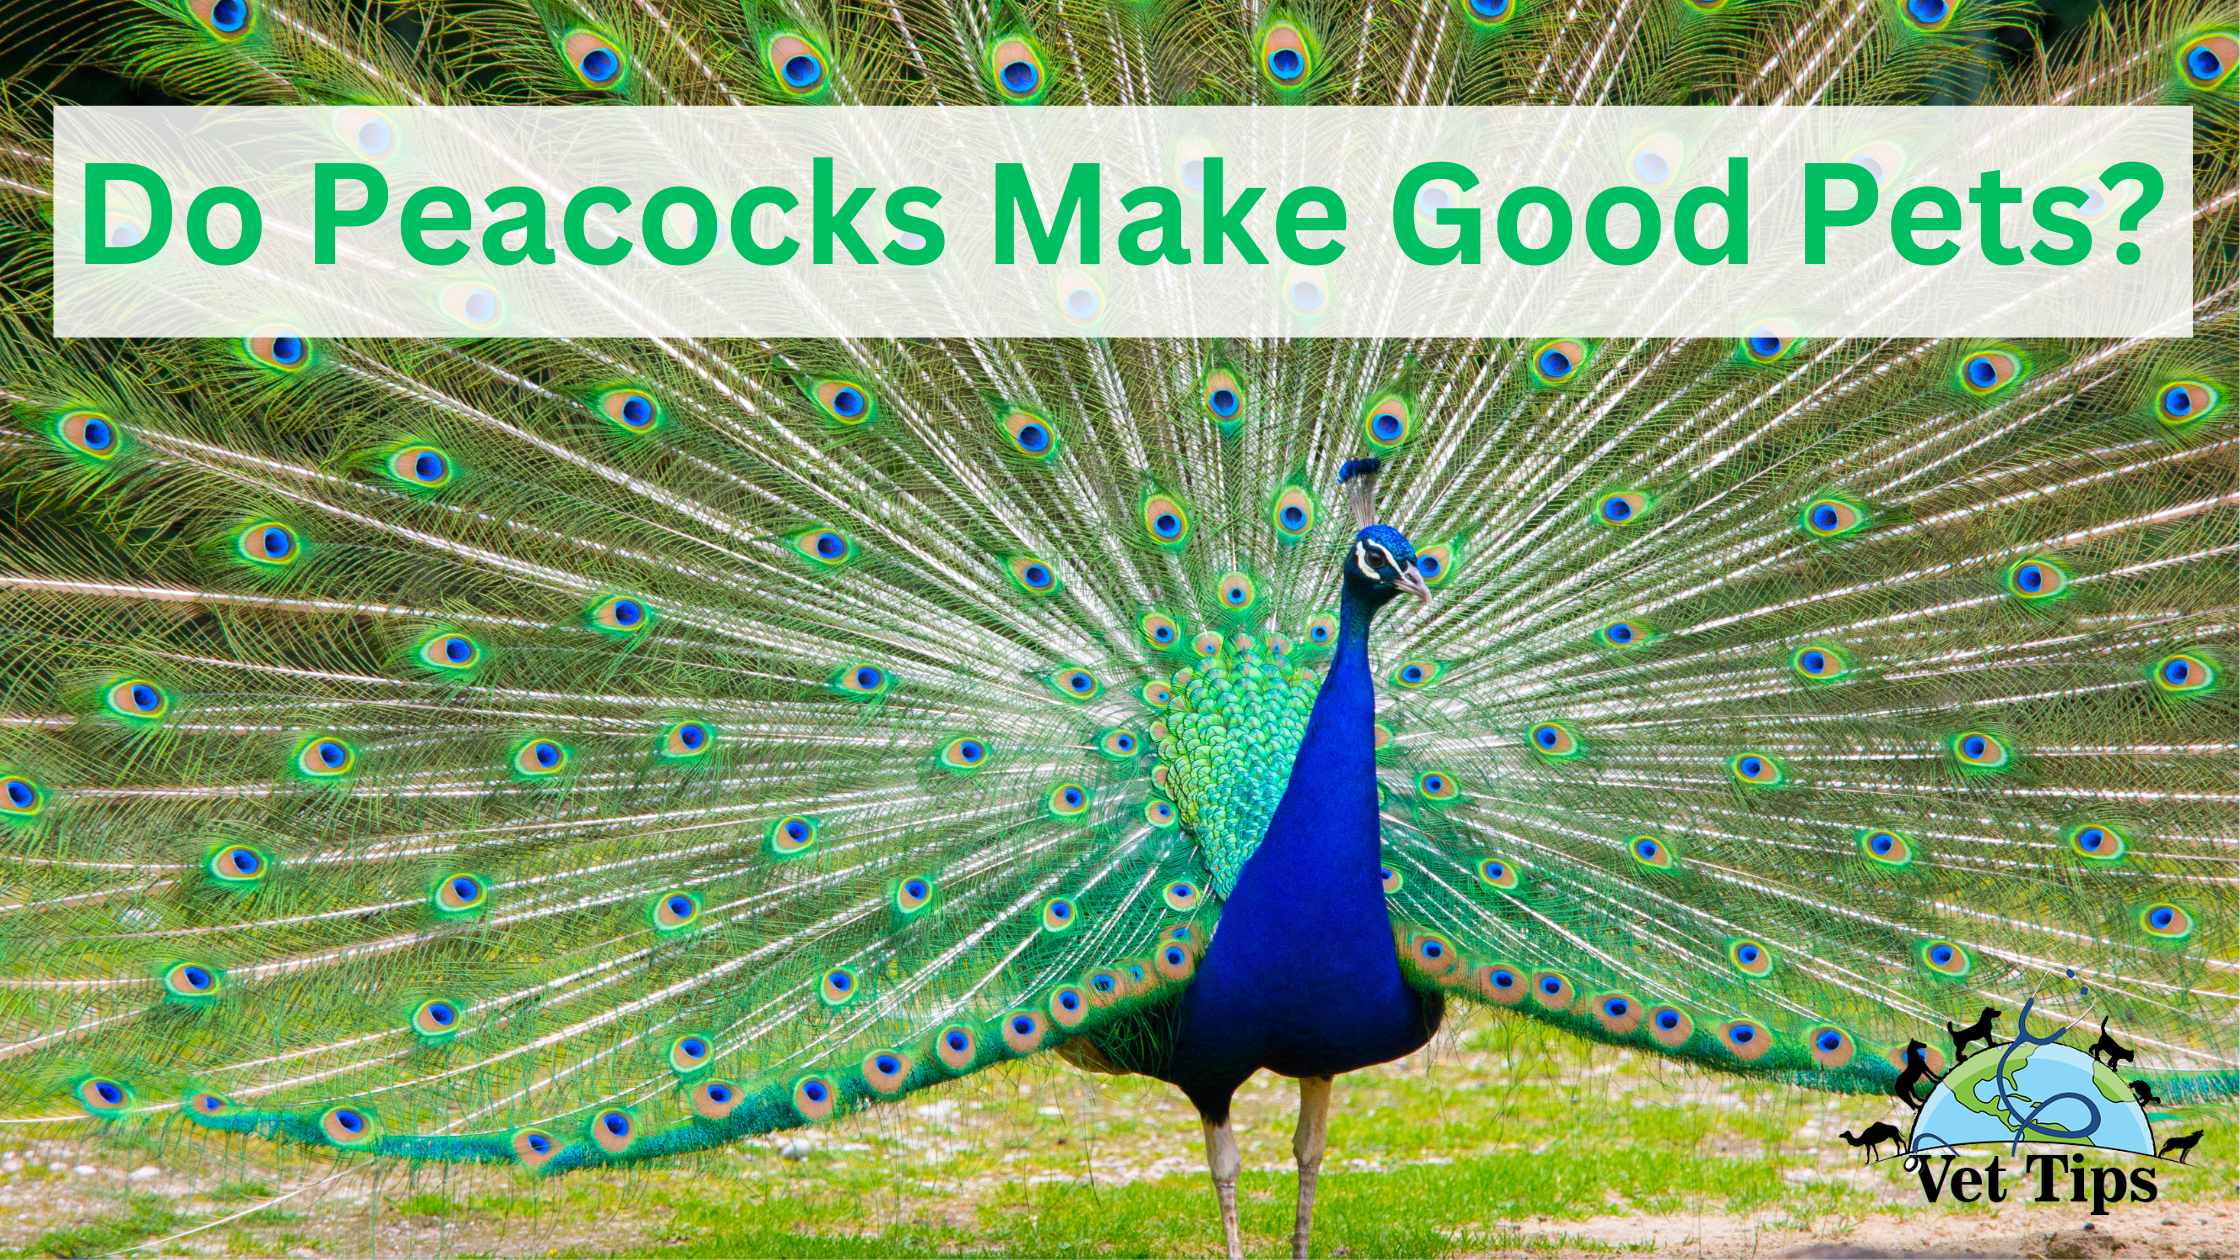 Do Peacocks Make Good Pets?